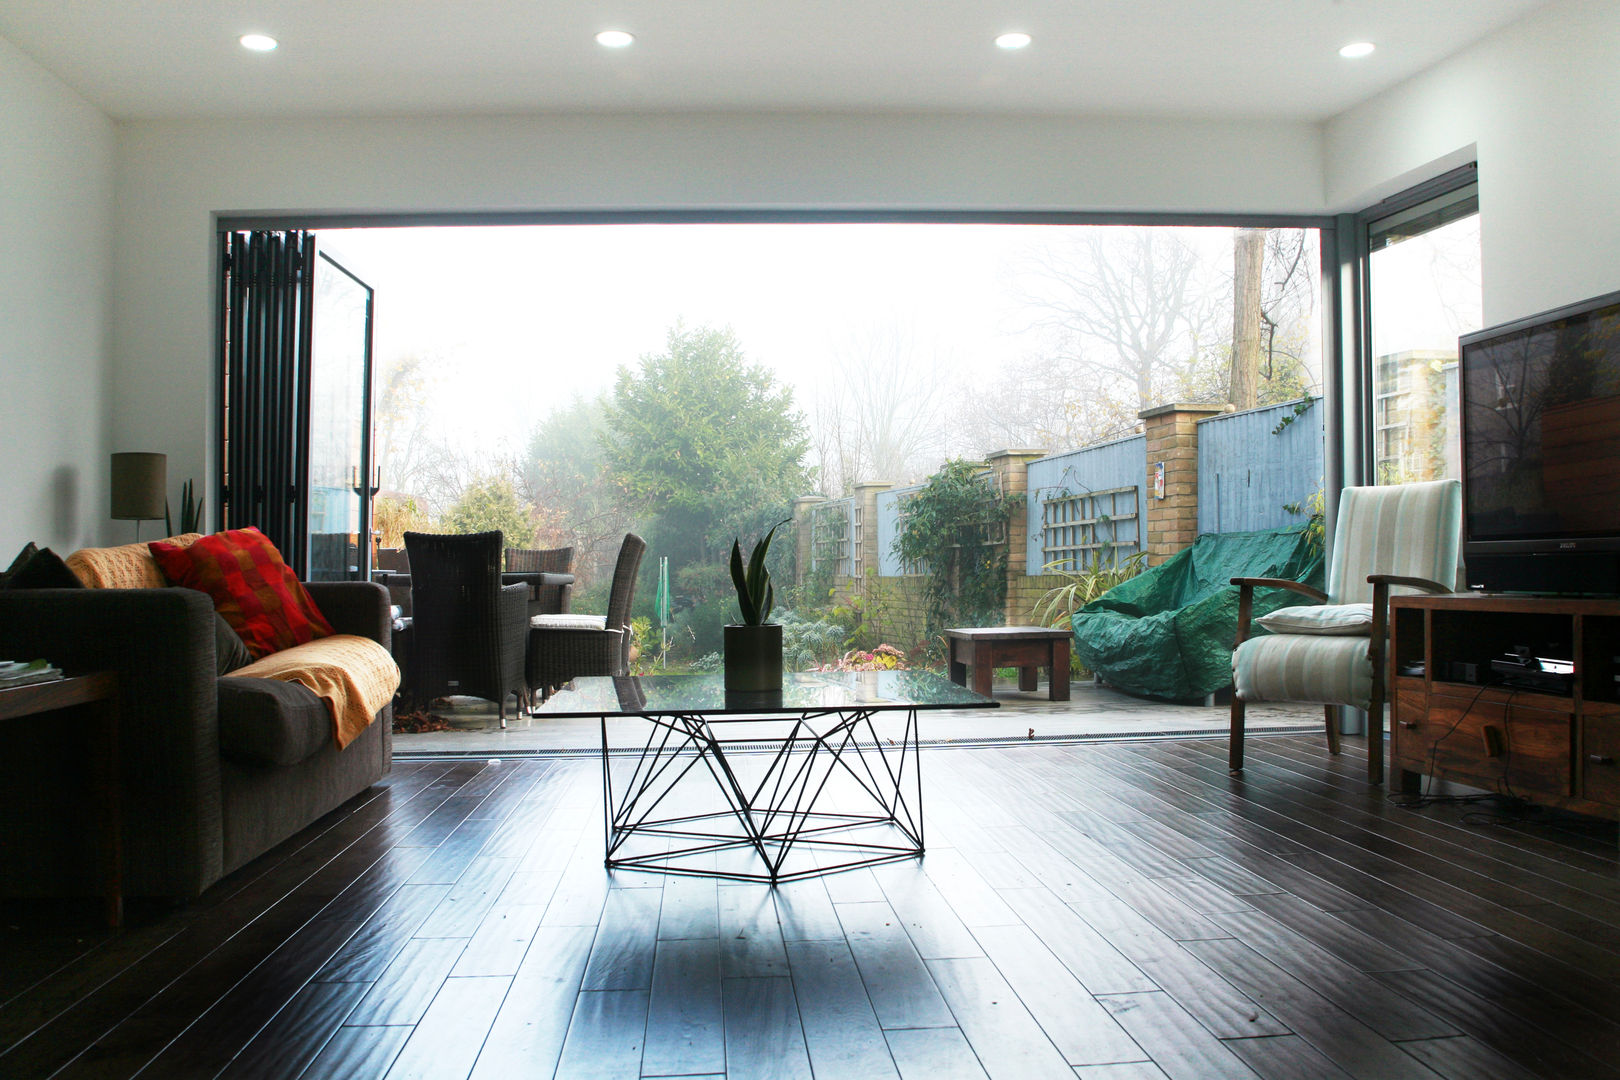 Brockley, Lewisham SE4, London | House extension GOAStudio London residential architecture limited Salon moderne